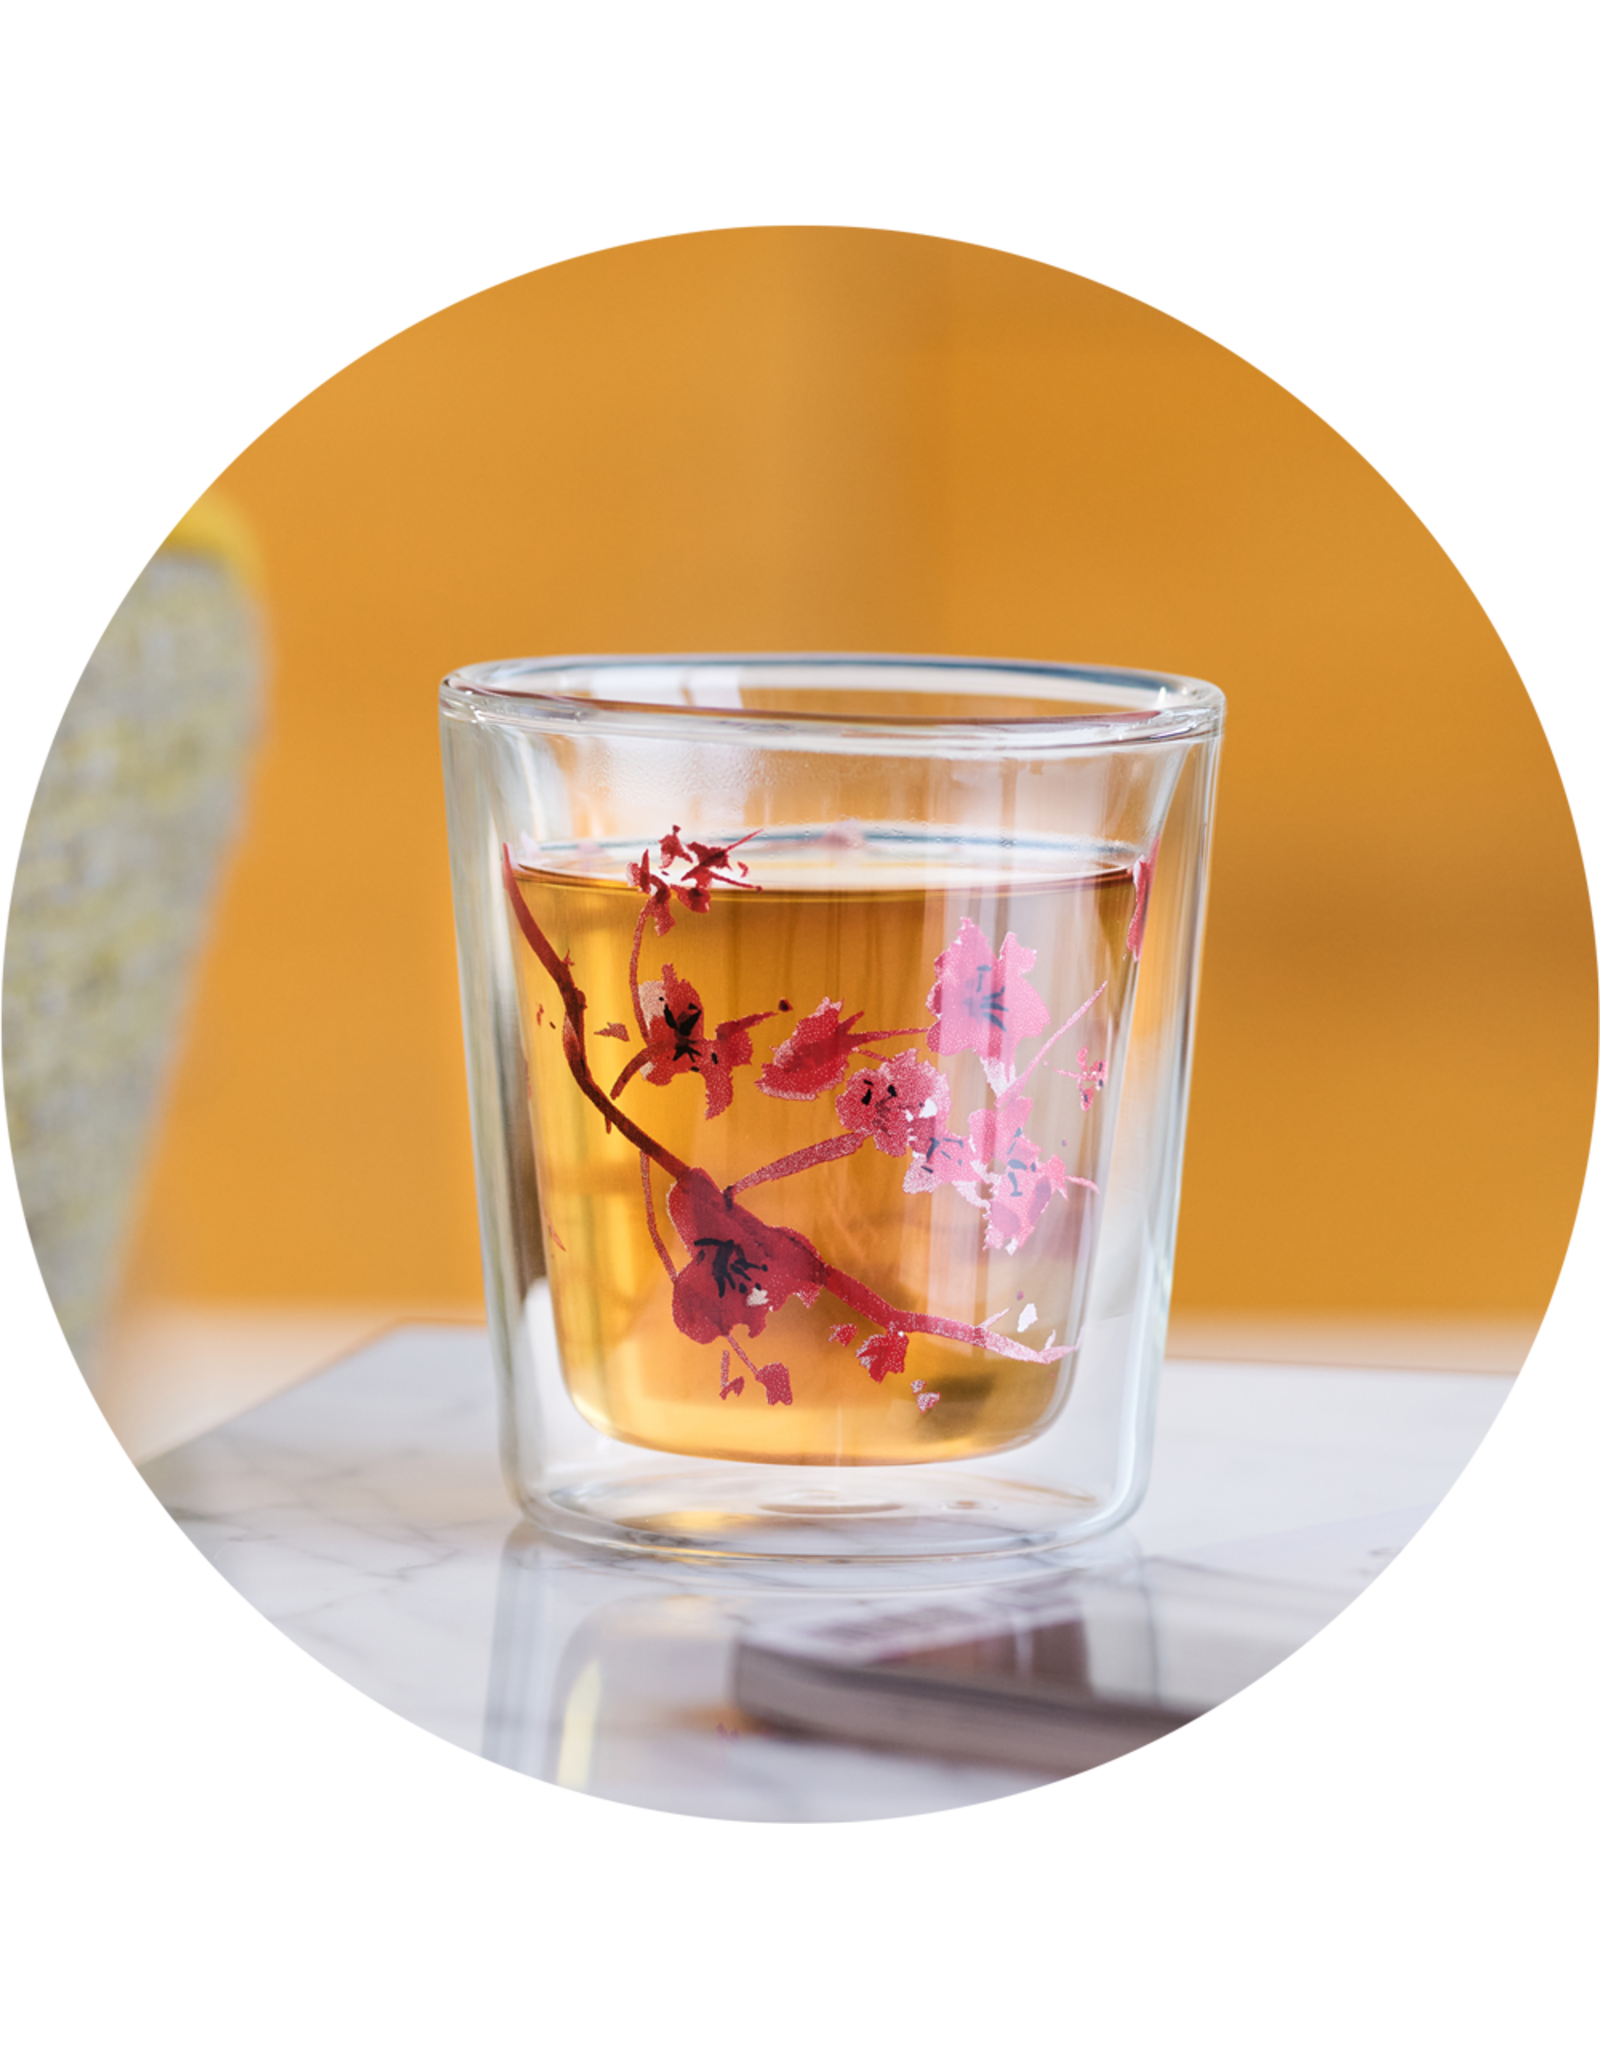 Eigenart Tea cup Lyn Cherry Blossom double-walled temperature-resistant borosilicate glass 250 ml